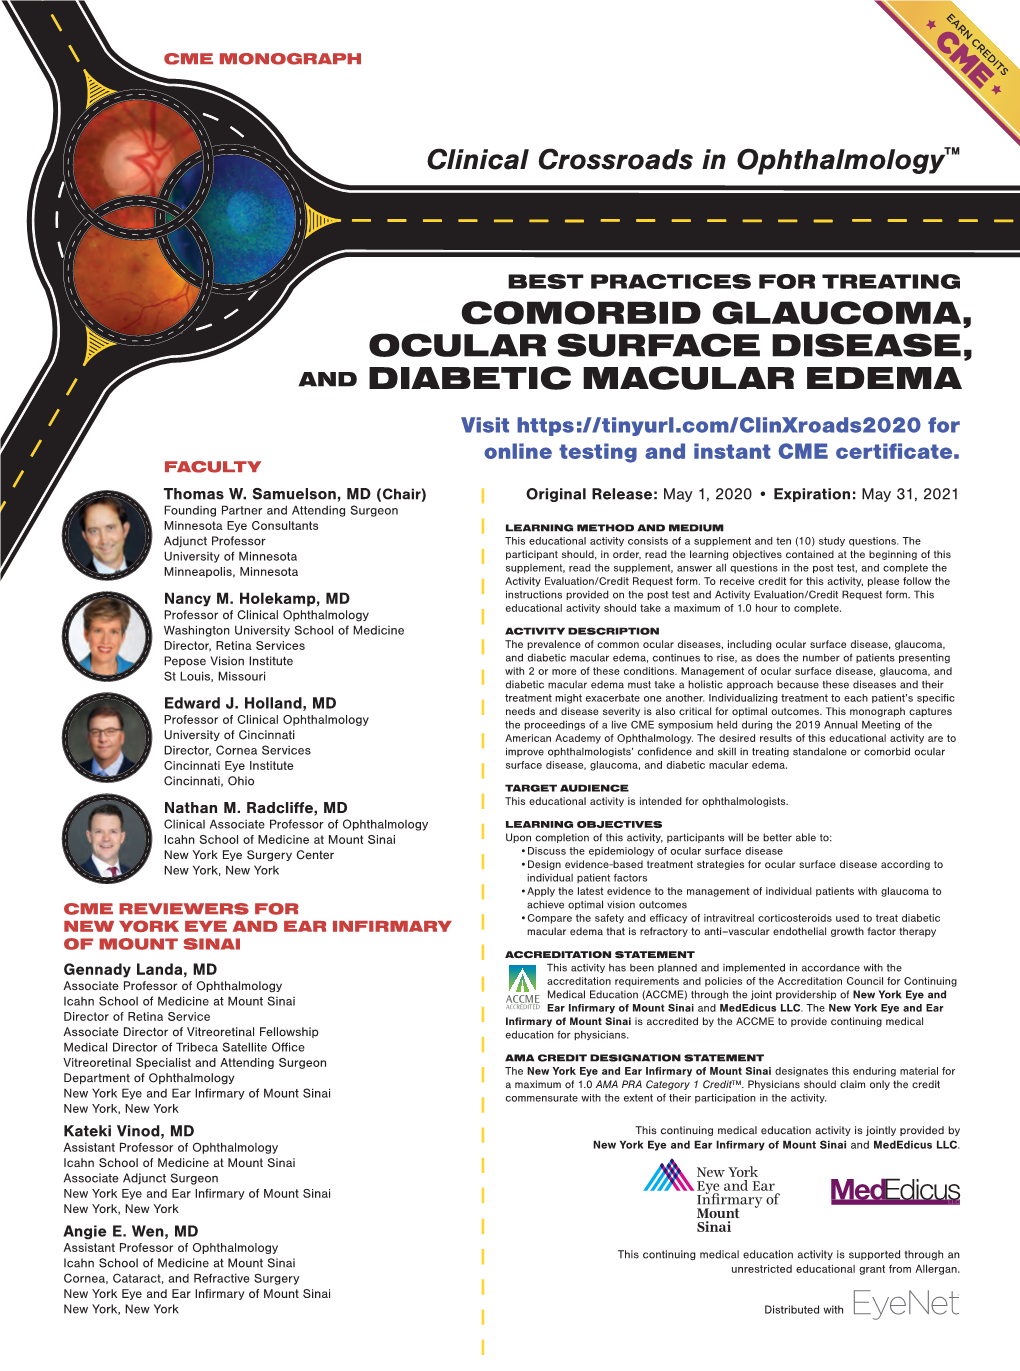 Comorbid Glaucoma, and Diabetic Macular Edema